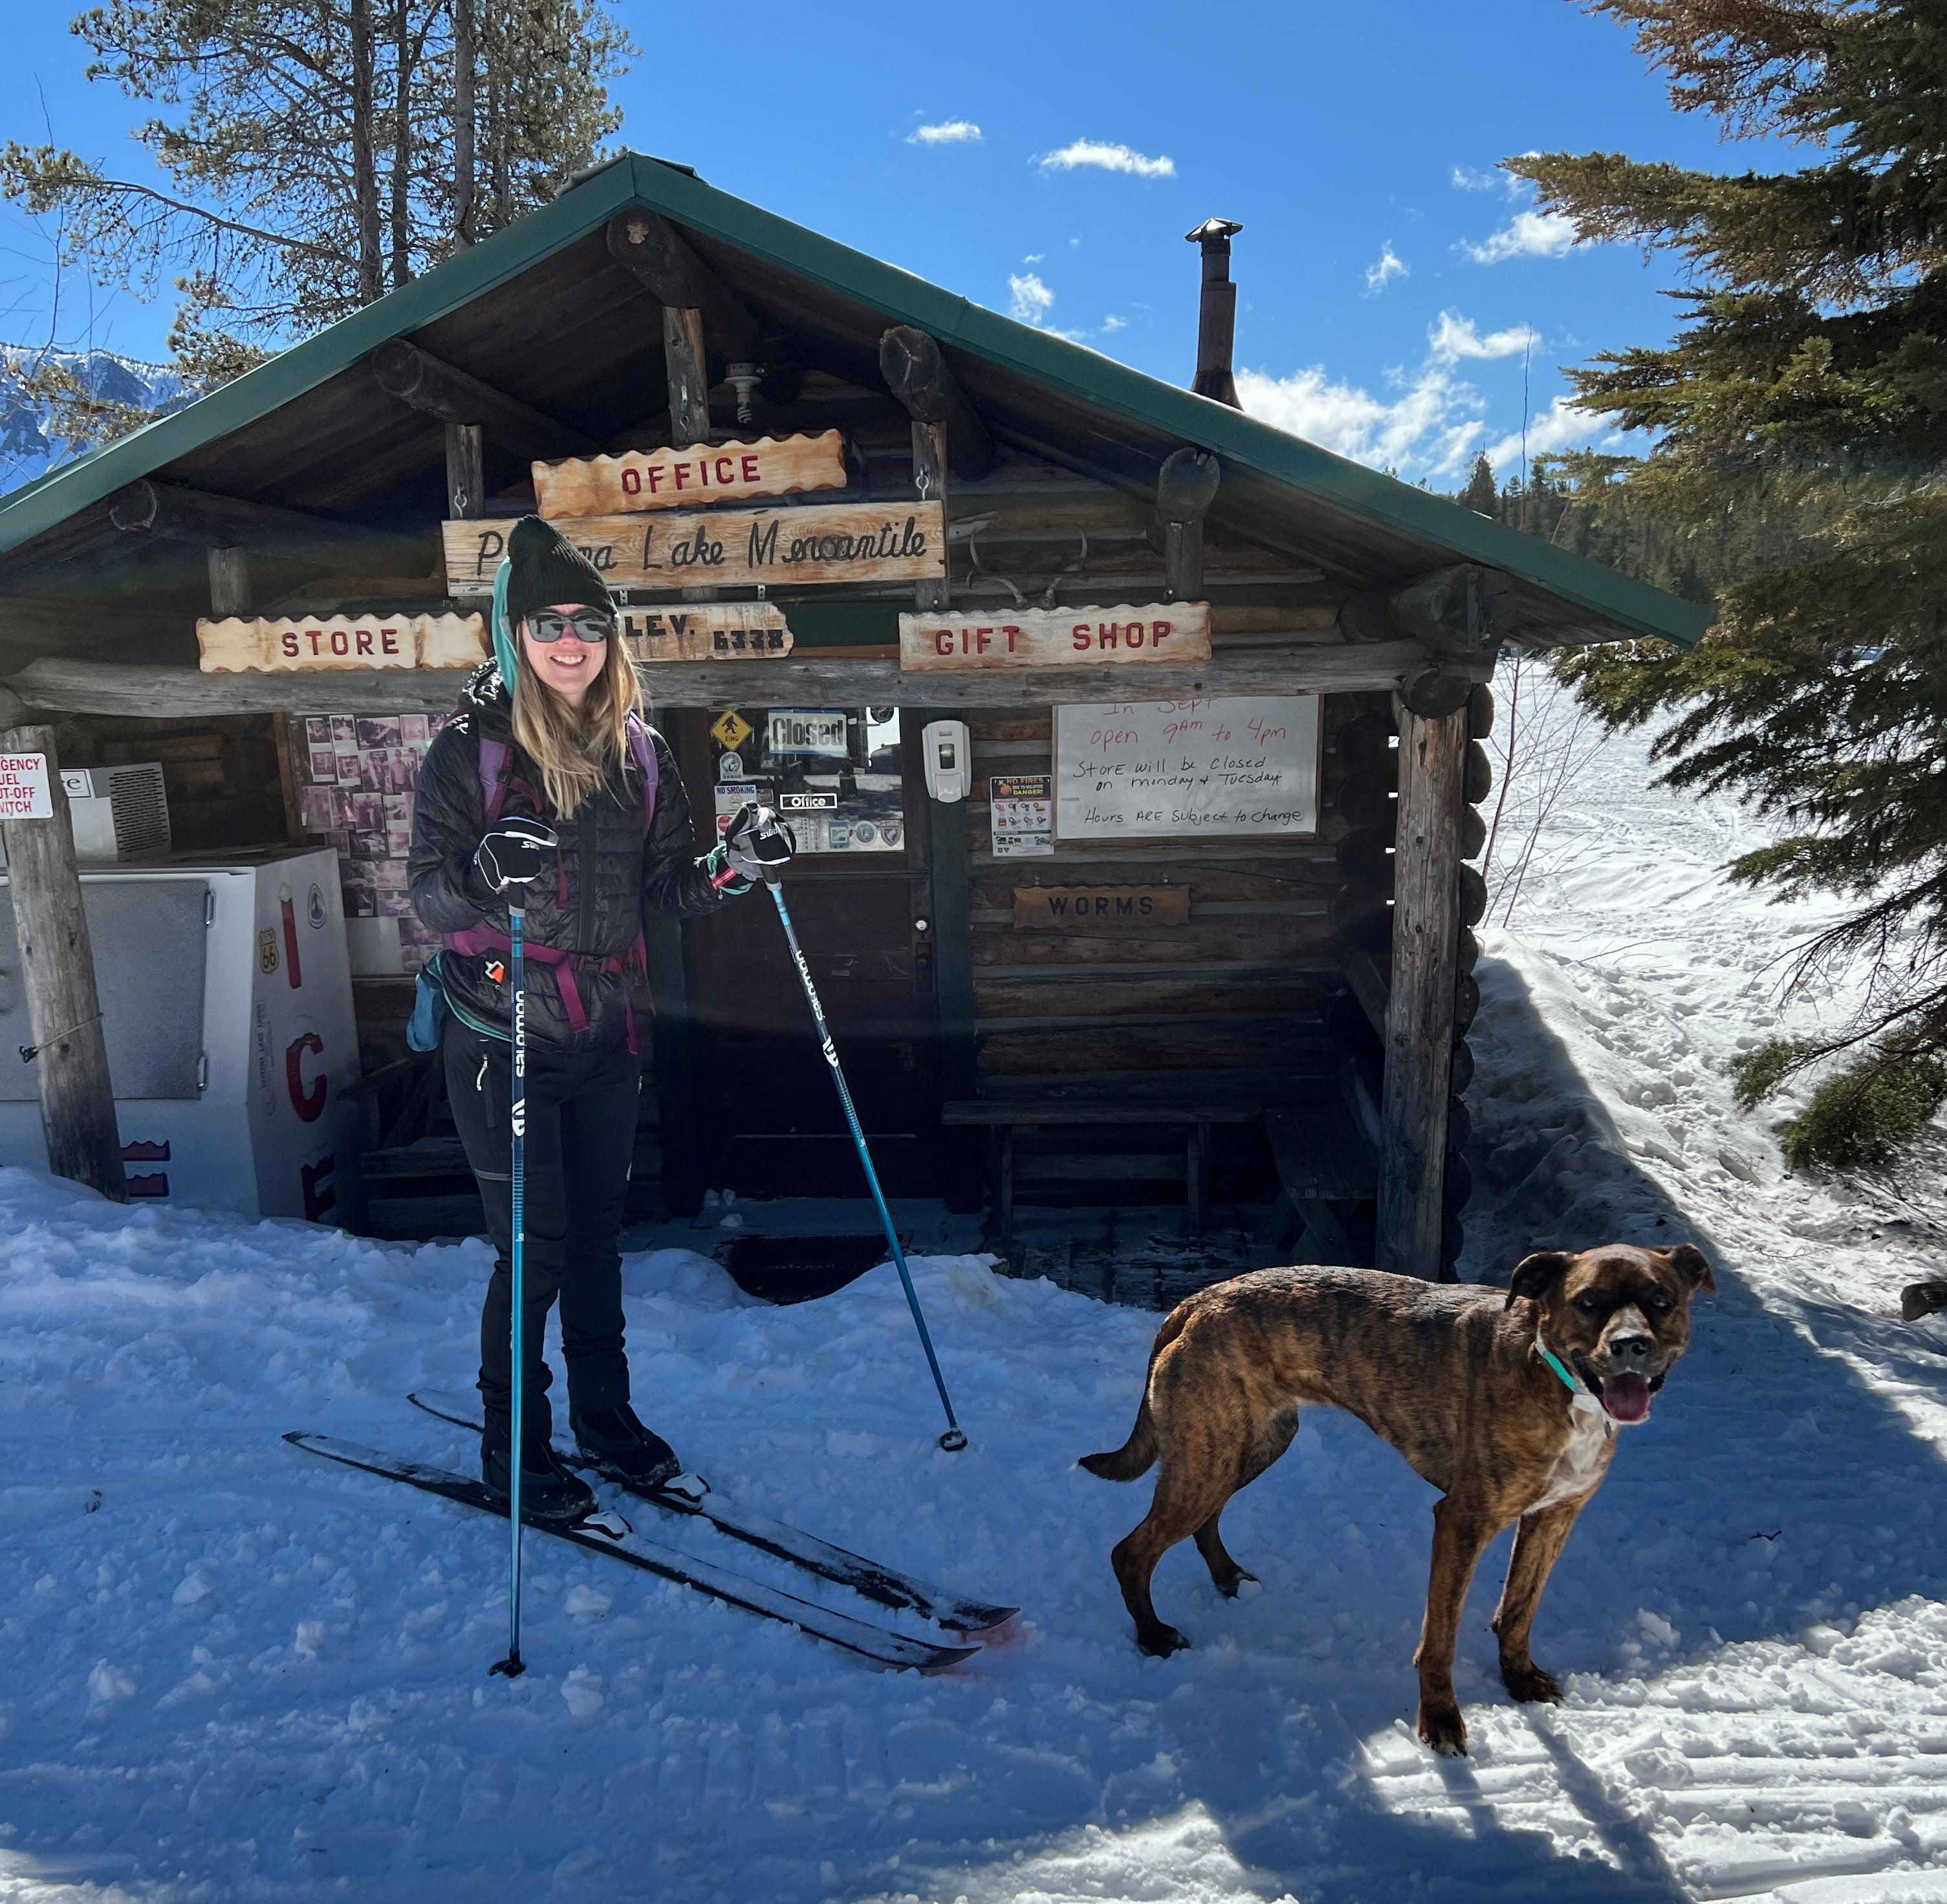 Woman and dog skiing together